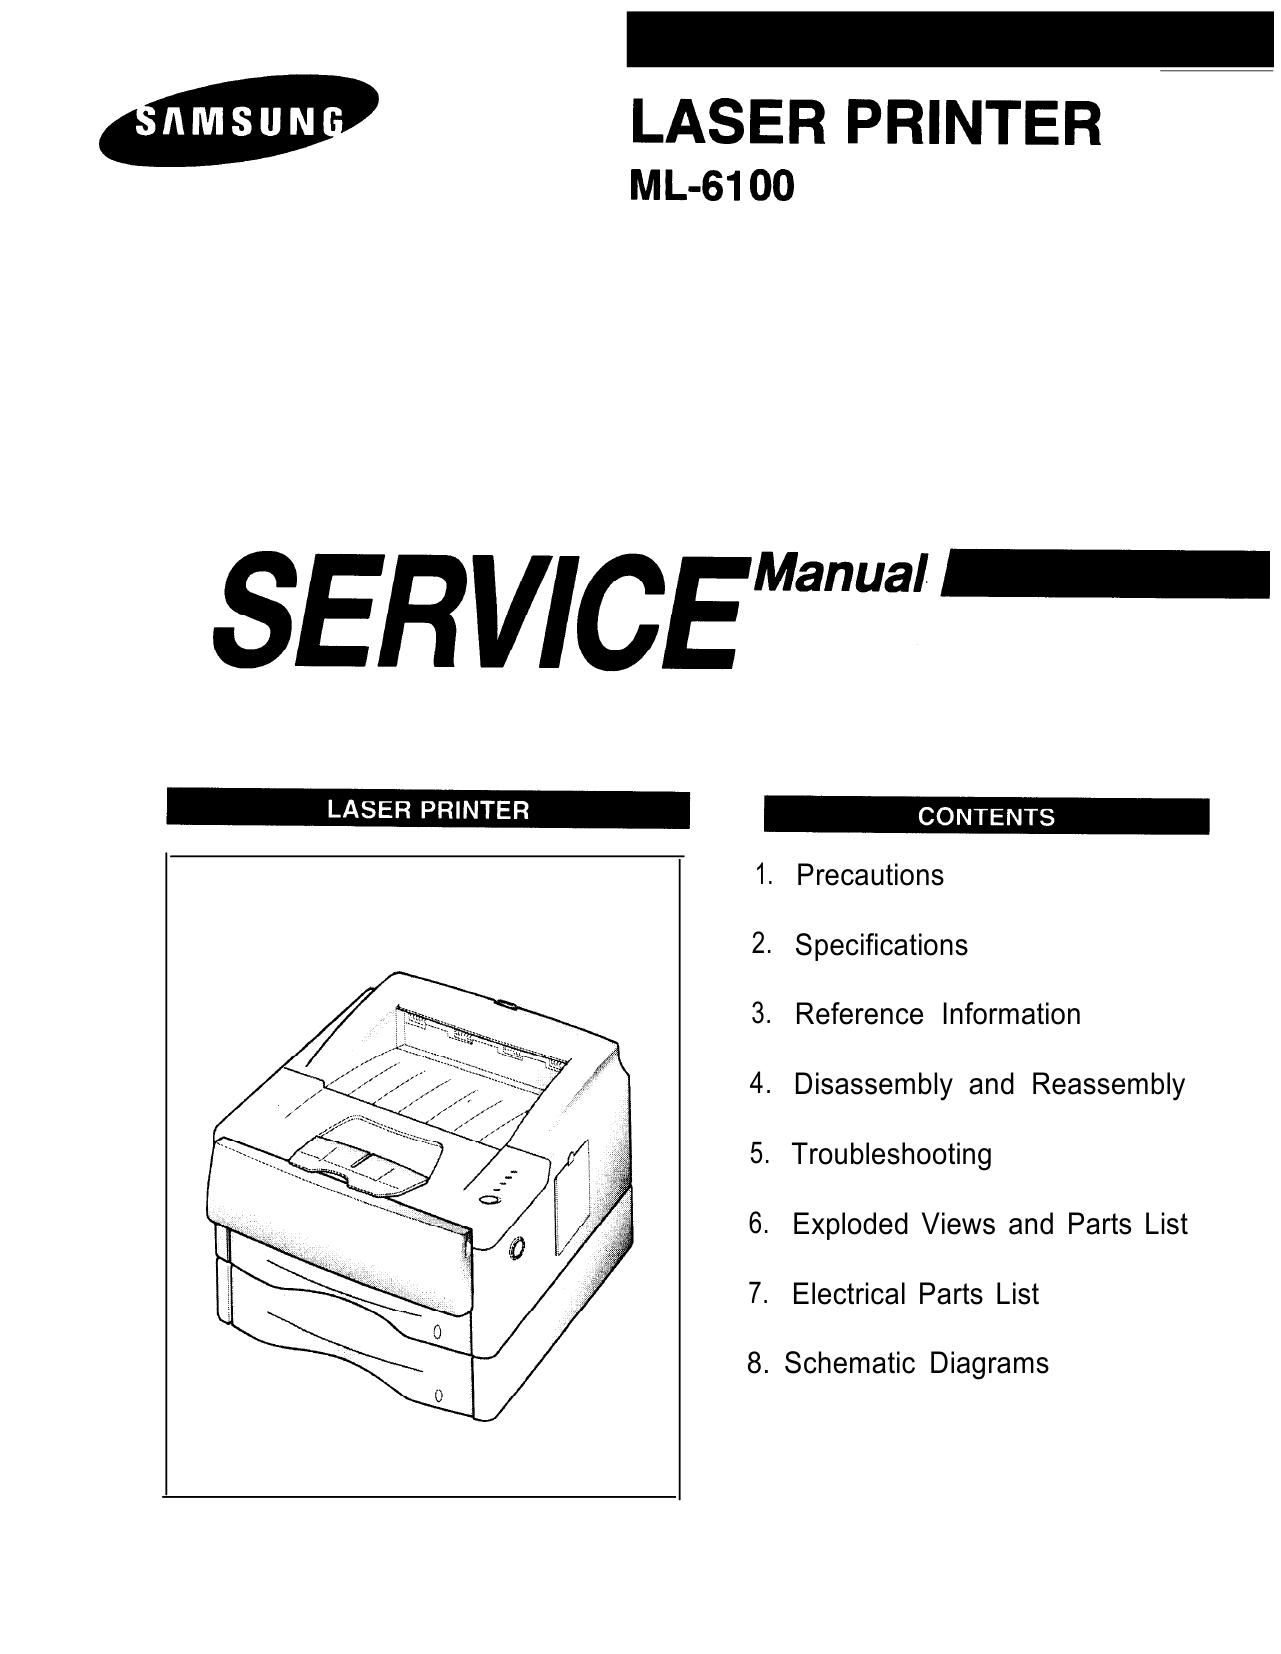 Samsung Laser-Printer ML-6100 Parts and Service Manual-1